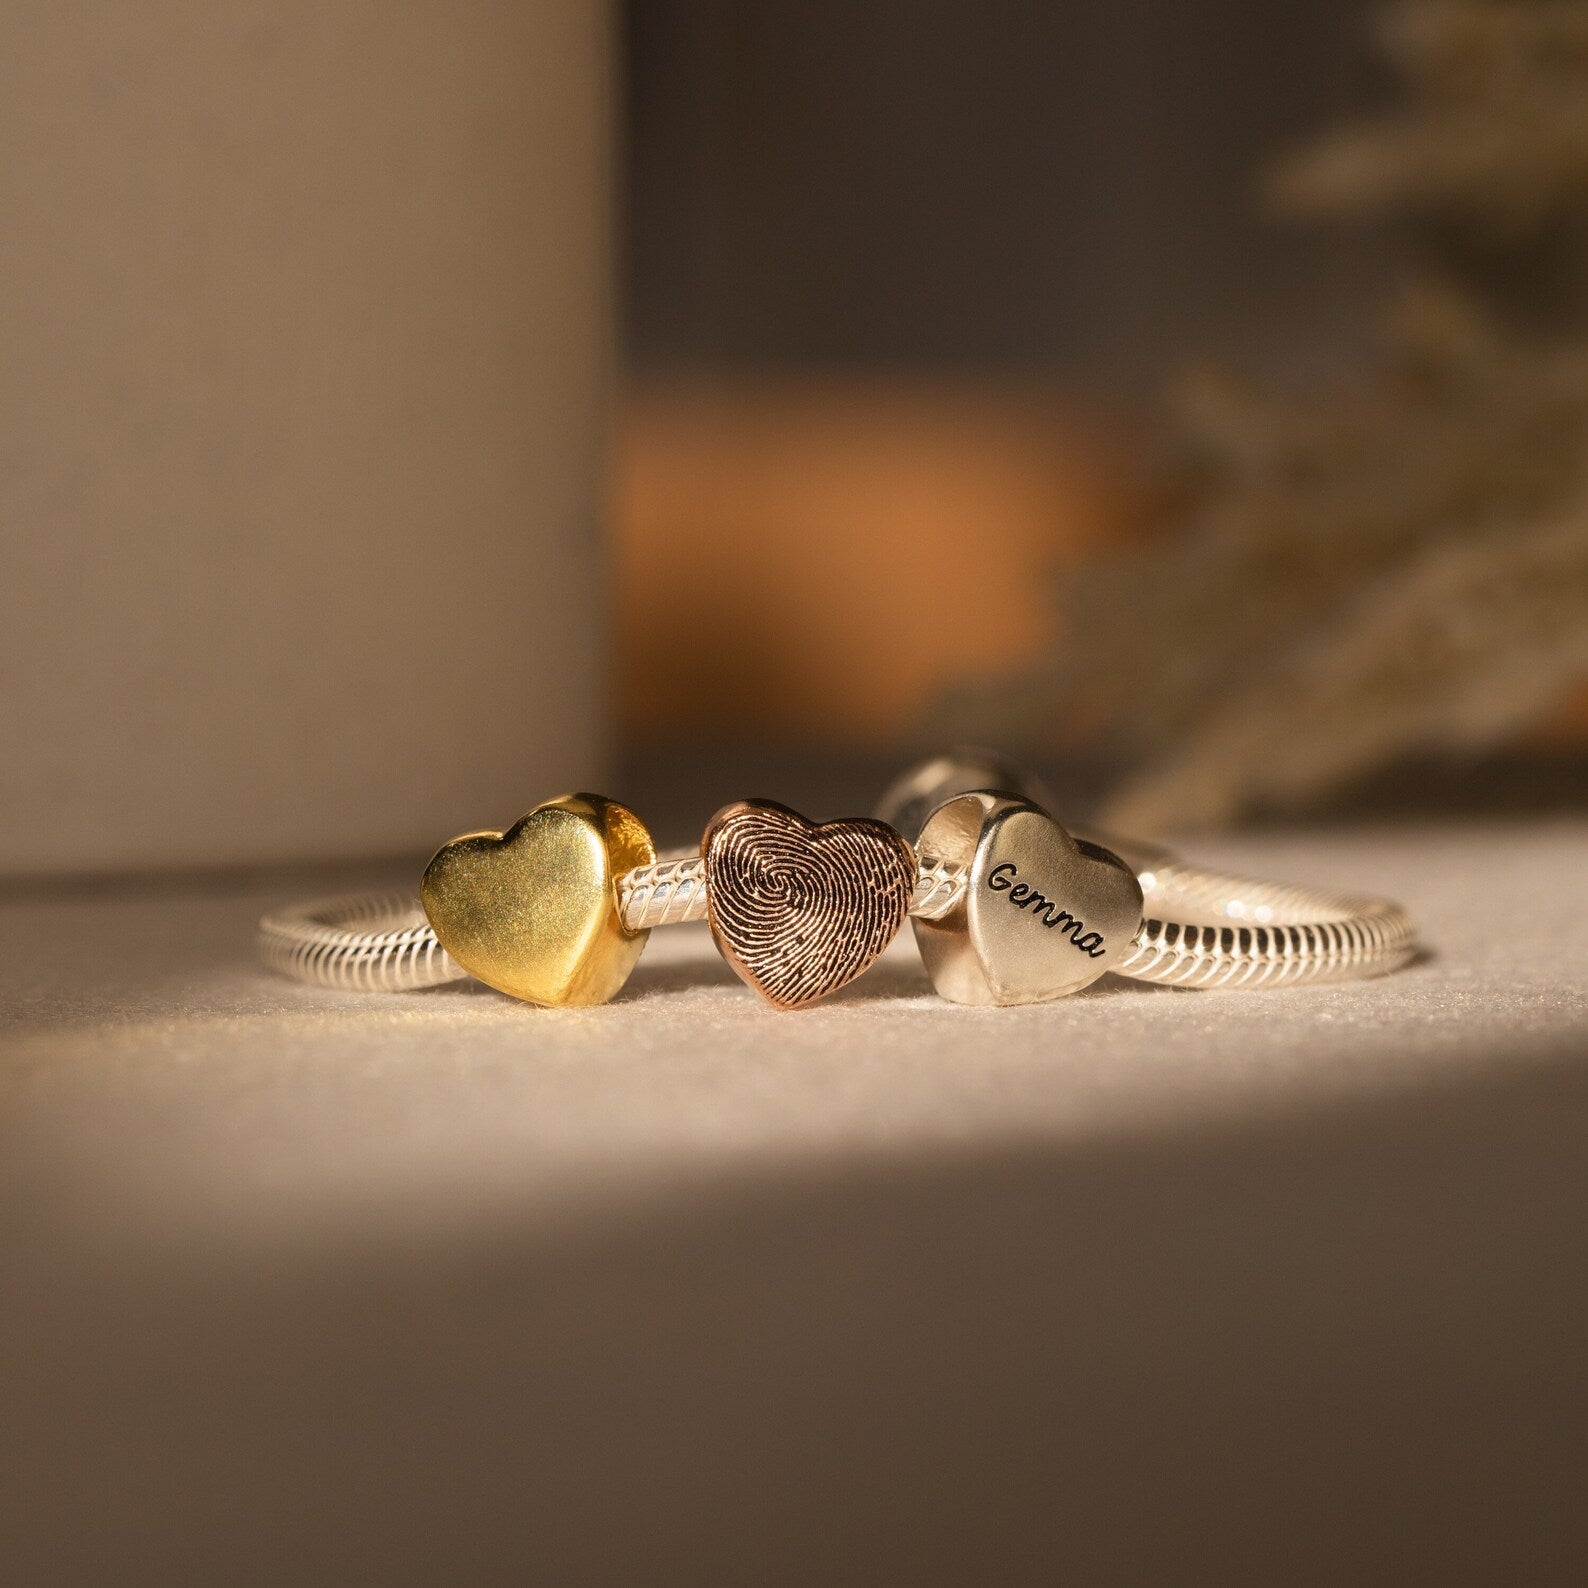 Cute Customized Pandora Necklace for Best Friends! | TikTok